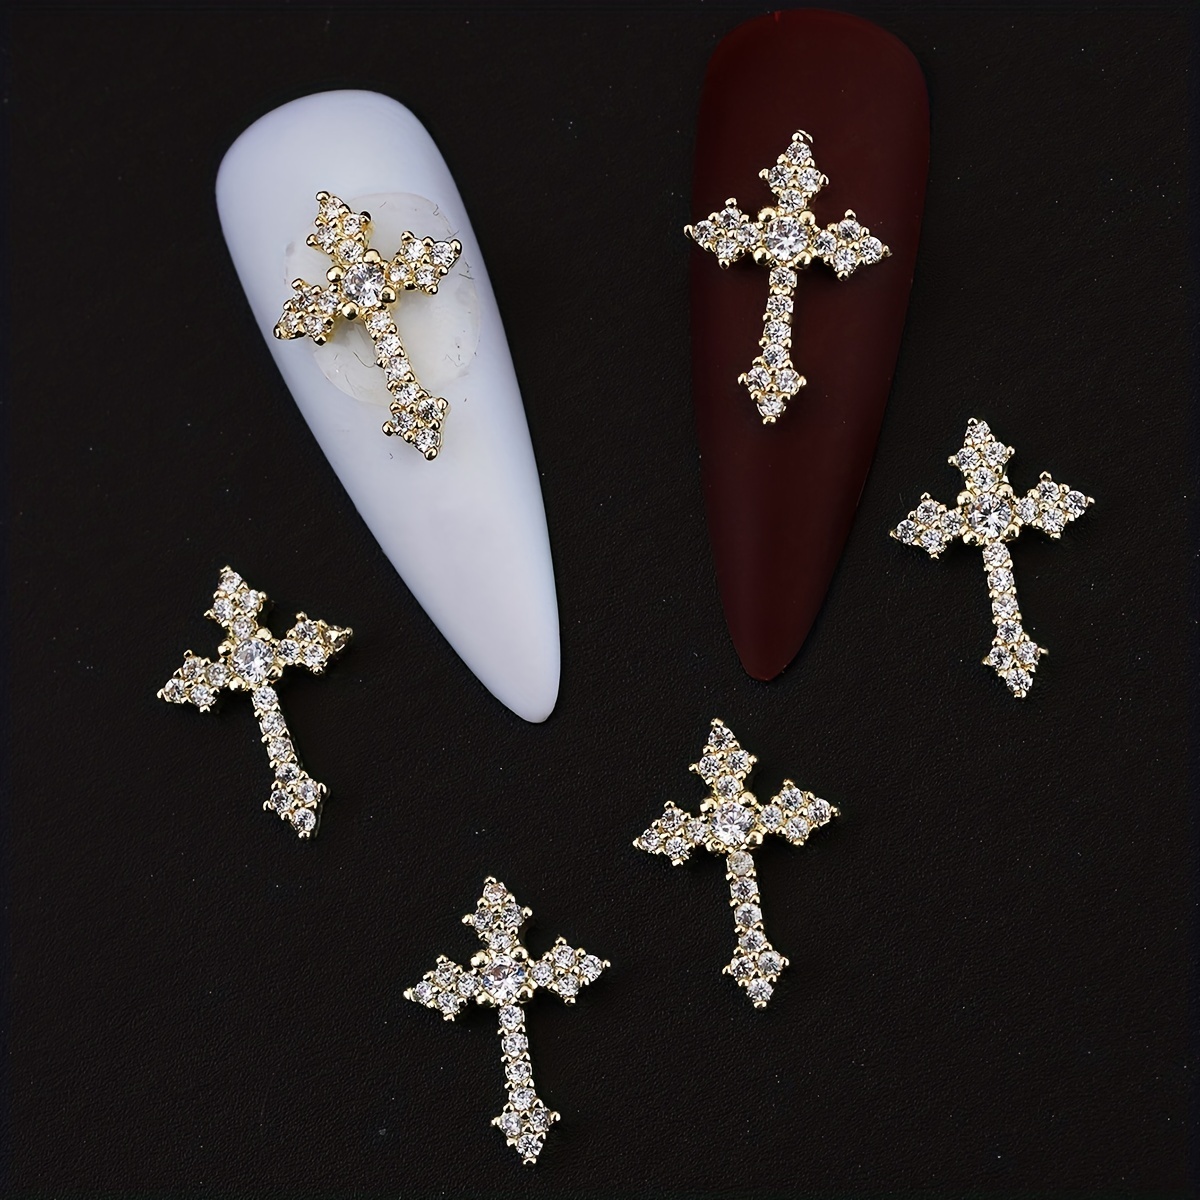 Nail Rhinestones Charms 3D Planet Cross Alloy Nail Art Gem Nail Studs Gem  Crystals Manicure Jewelry Nail Art Drop Shipping - AliExpress